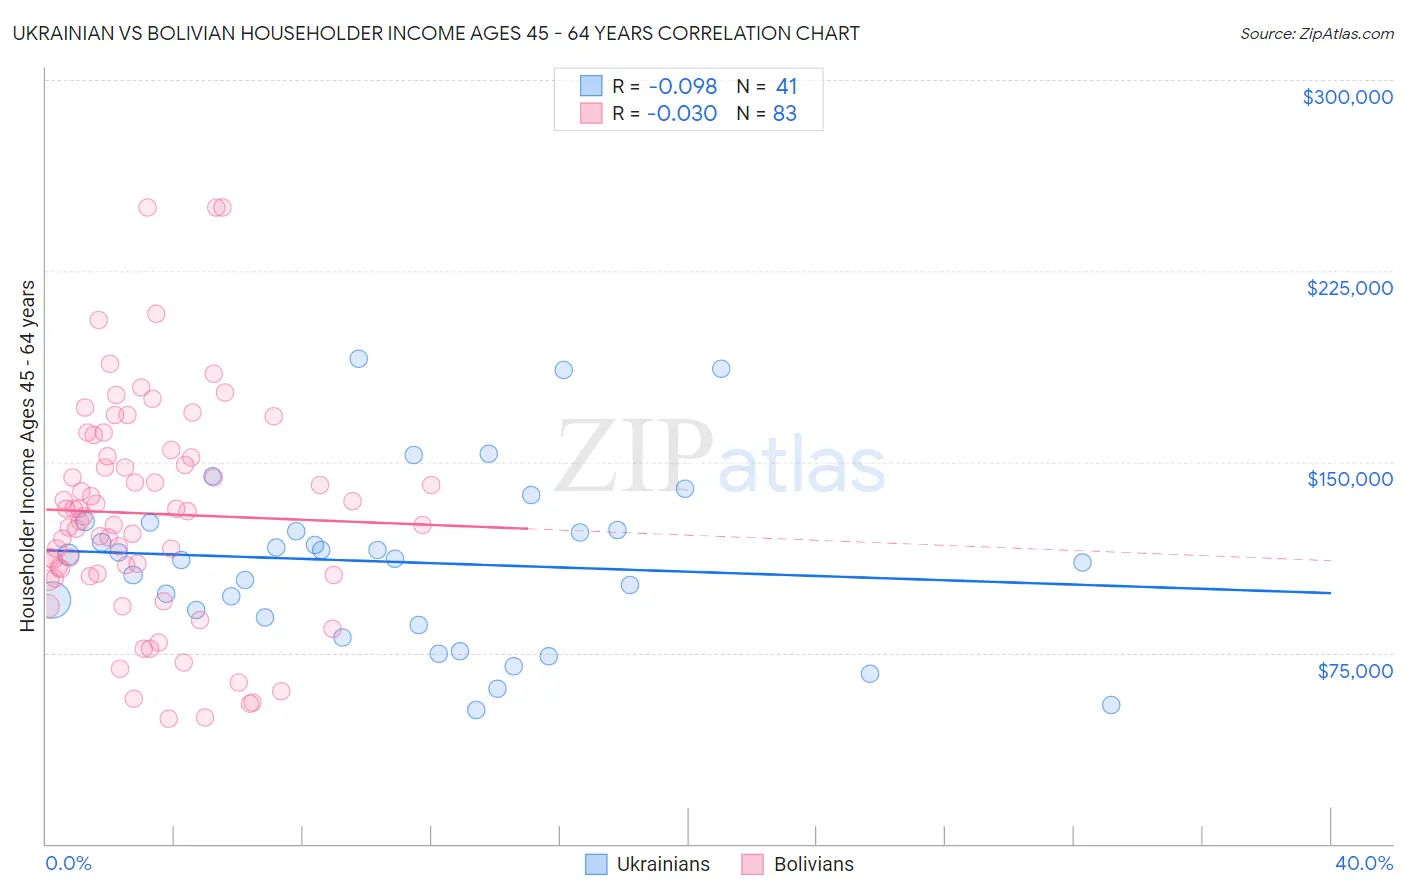 Ukrainian vs Bolivian Householder Income Ages 45 - 64 years